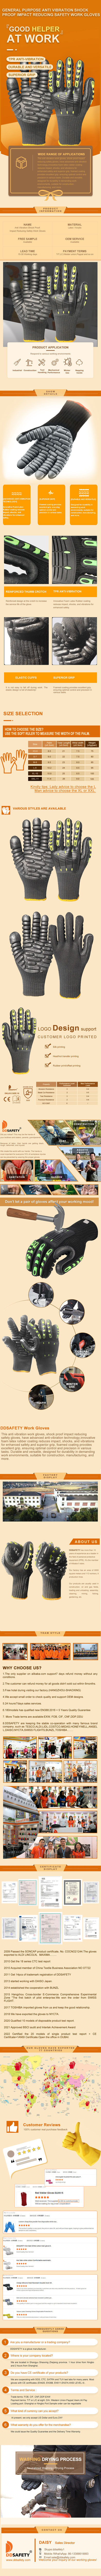 Best Anti-Vibration Safety Gloves - DKL612 Best Anti-Vibration Safety Gloves - DKL612 gloves,Anti-Vibration Gloves,Safety Gloves